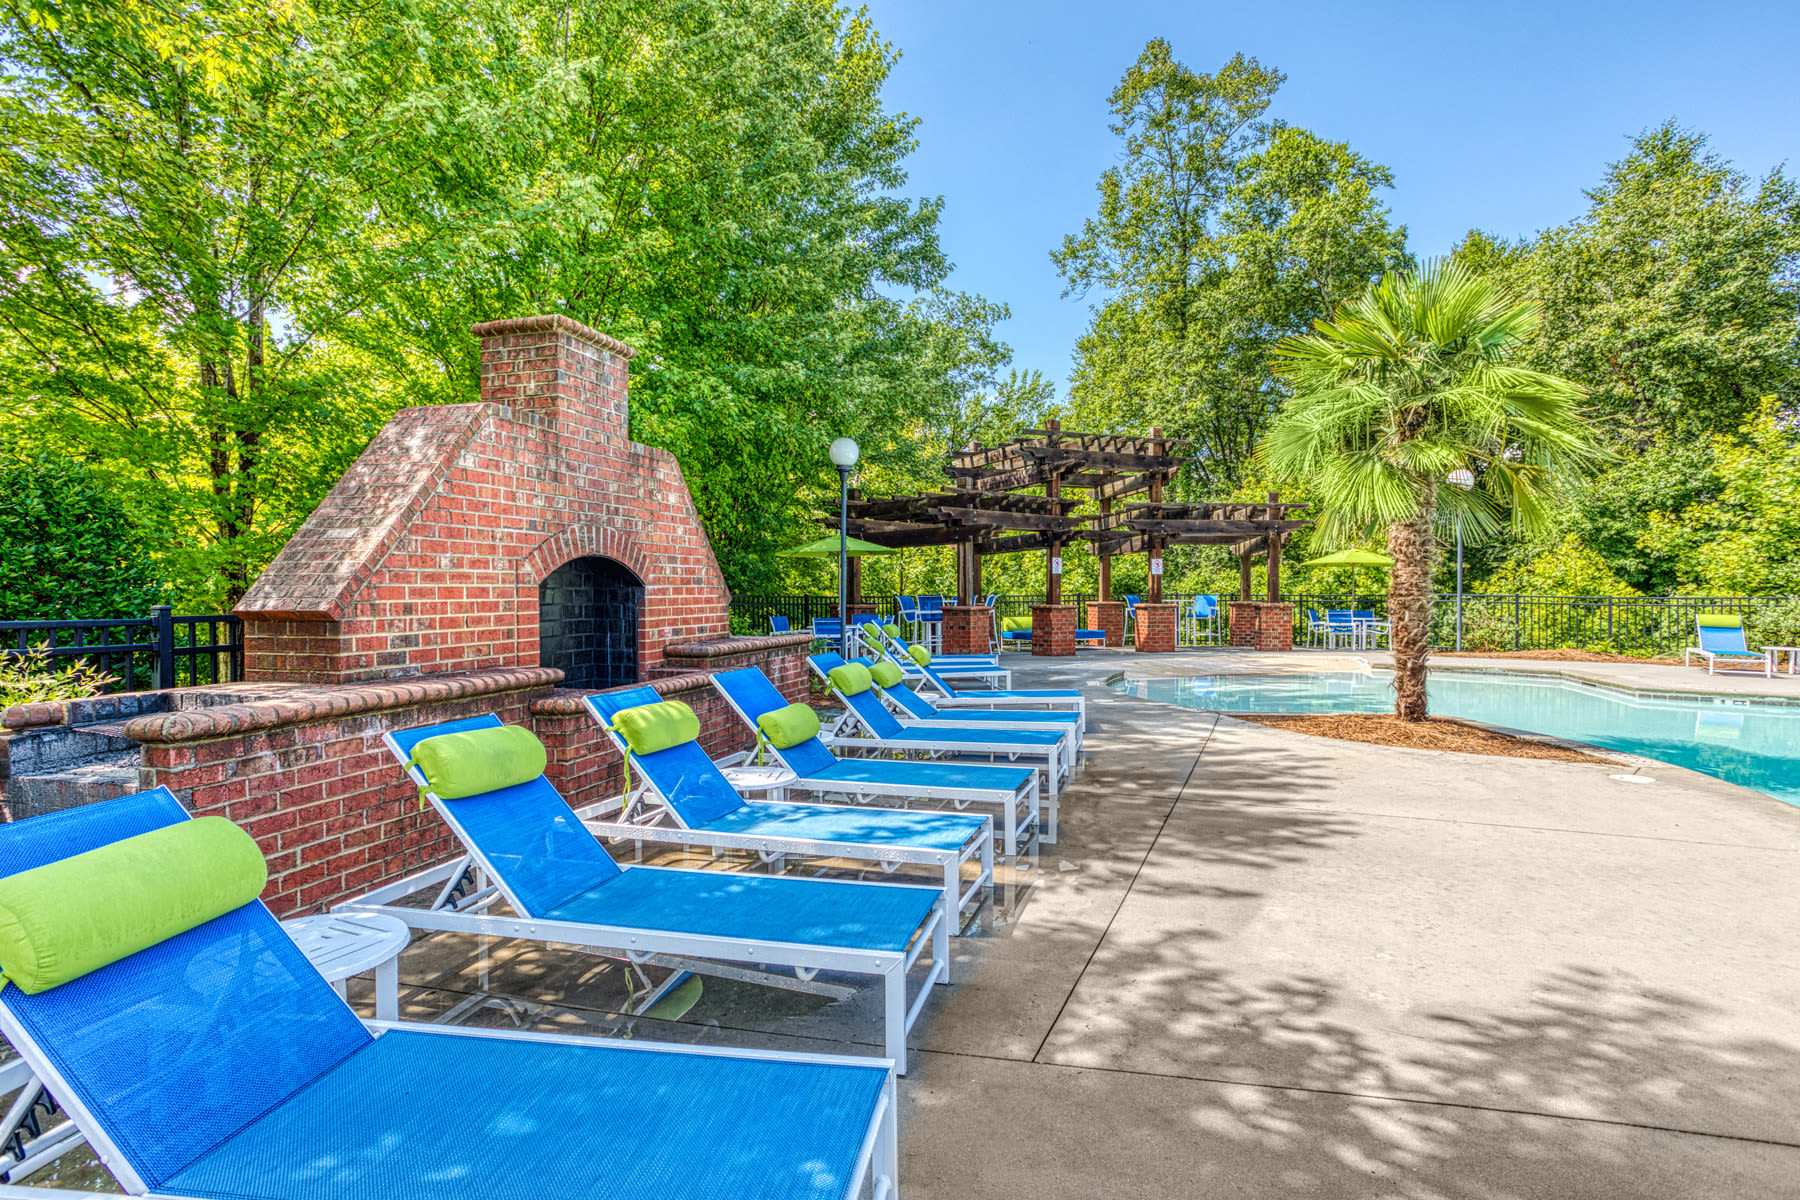 Pool area at Alaris Village in Winston Salem, North Carolina